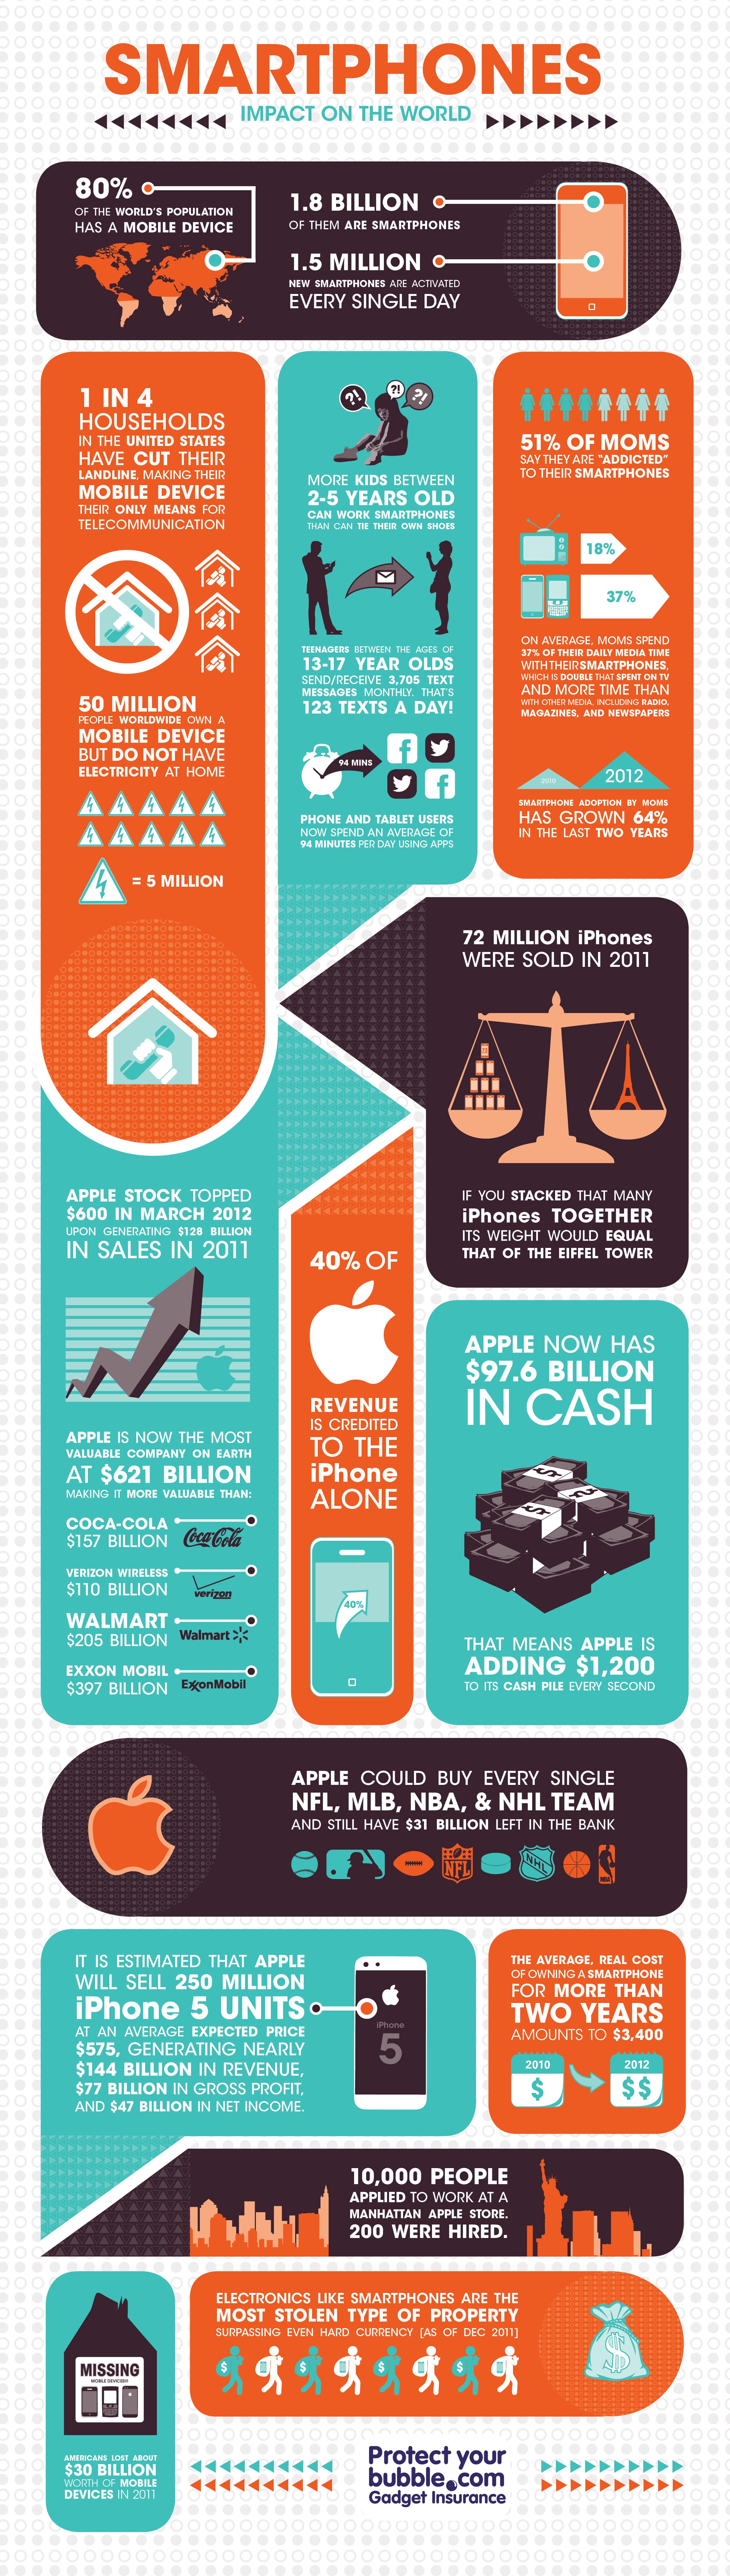 financial-gain-iphone-revenue-infographic